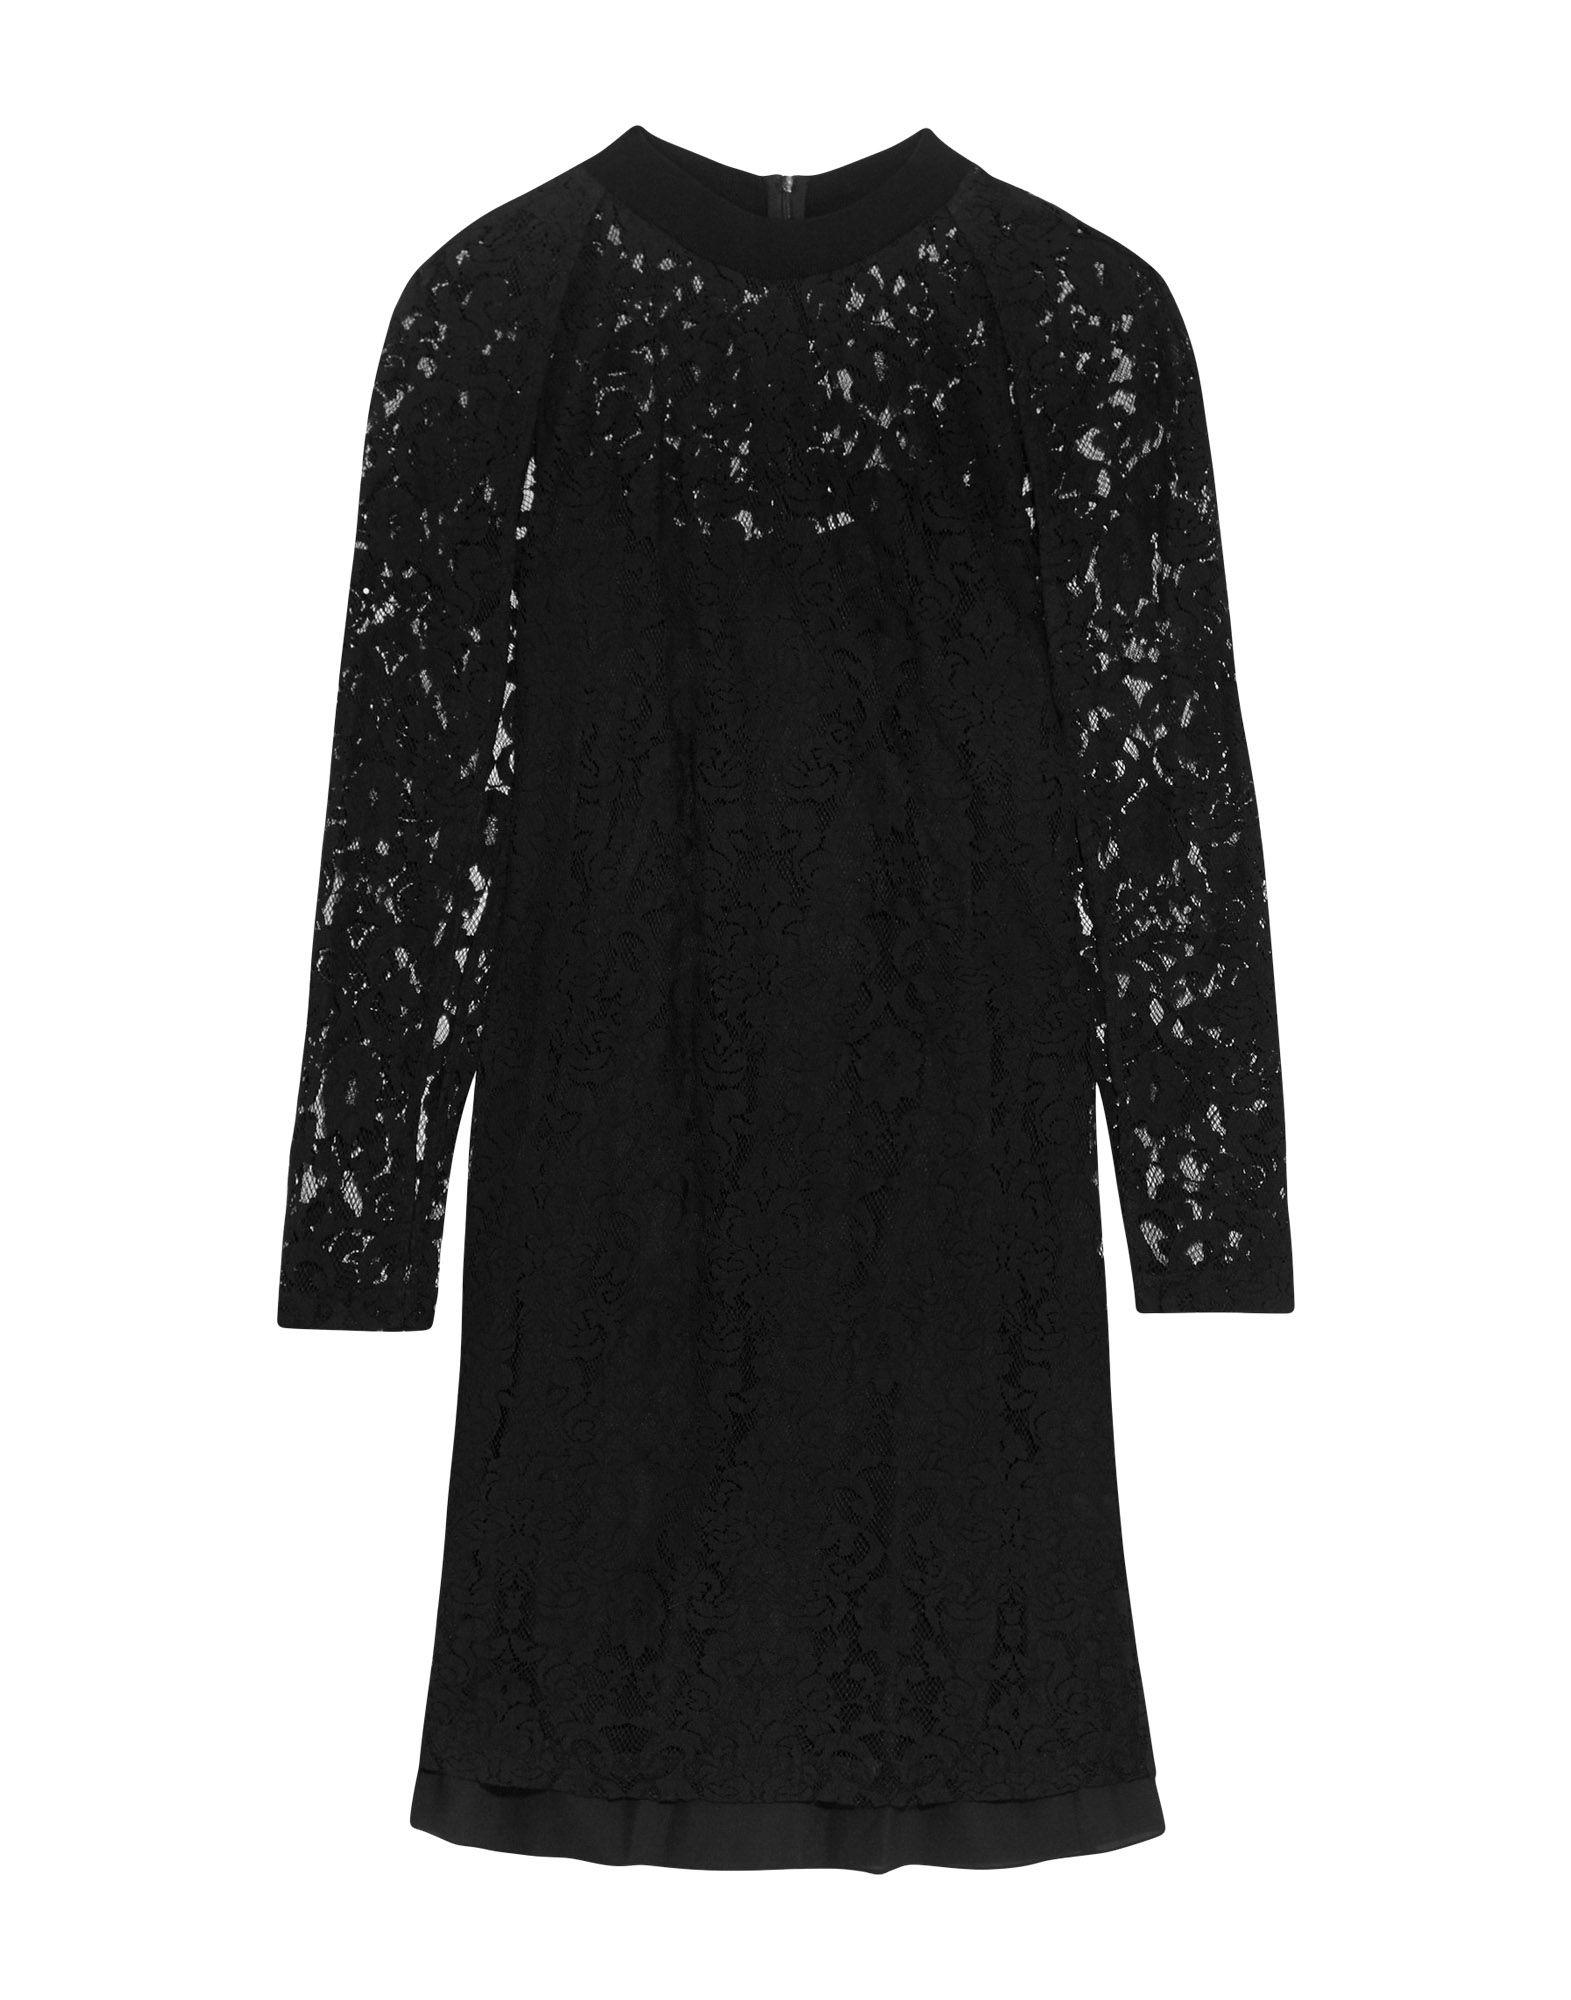 DKNY Lace Knee-length Dress in Black - Lyst